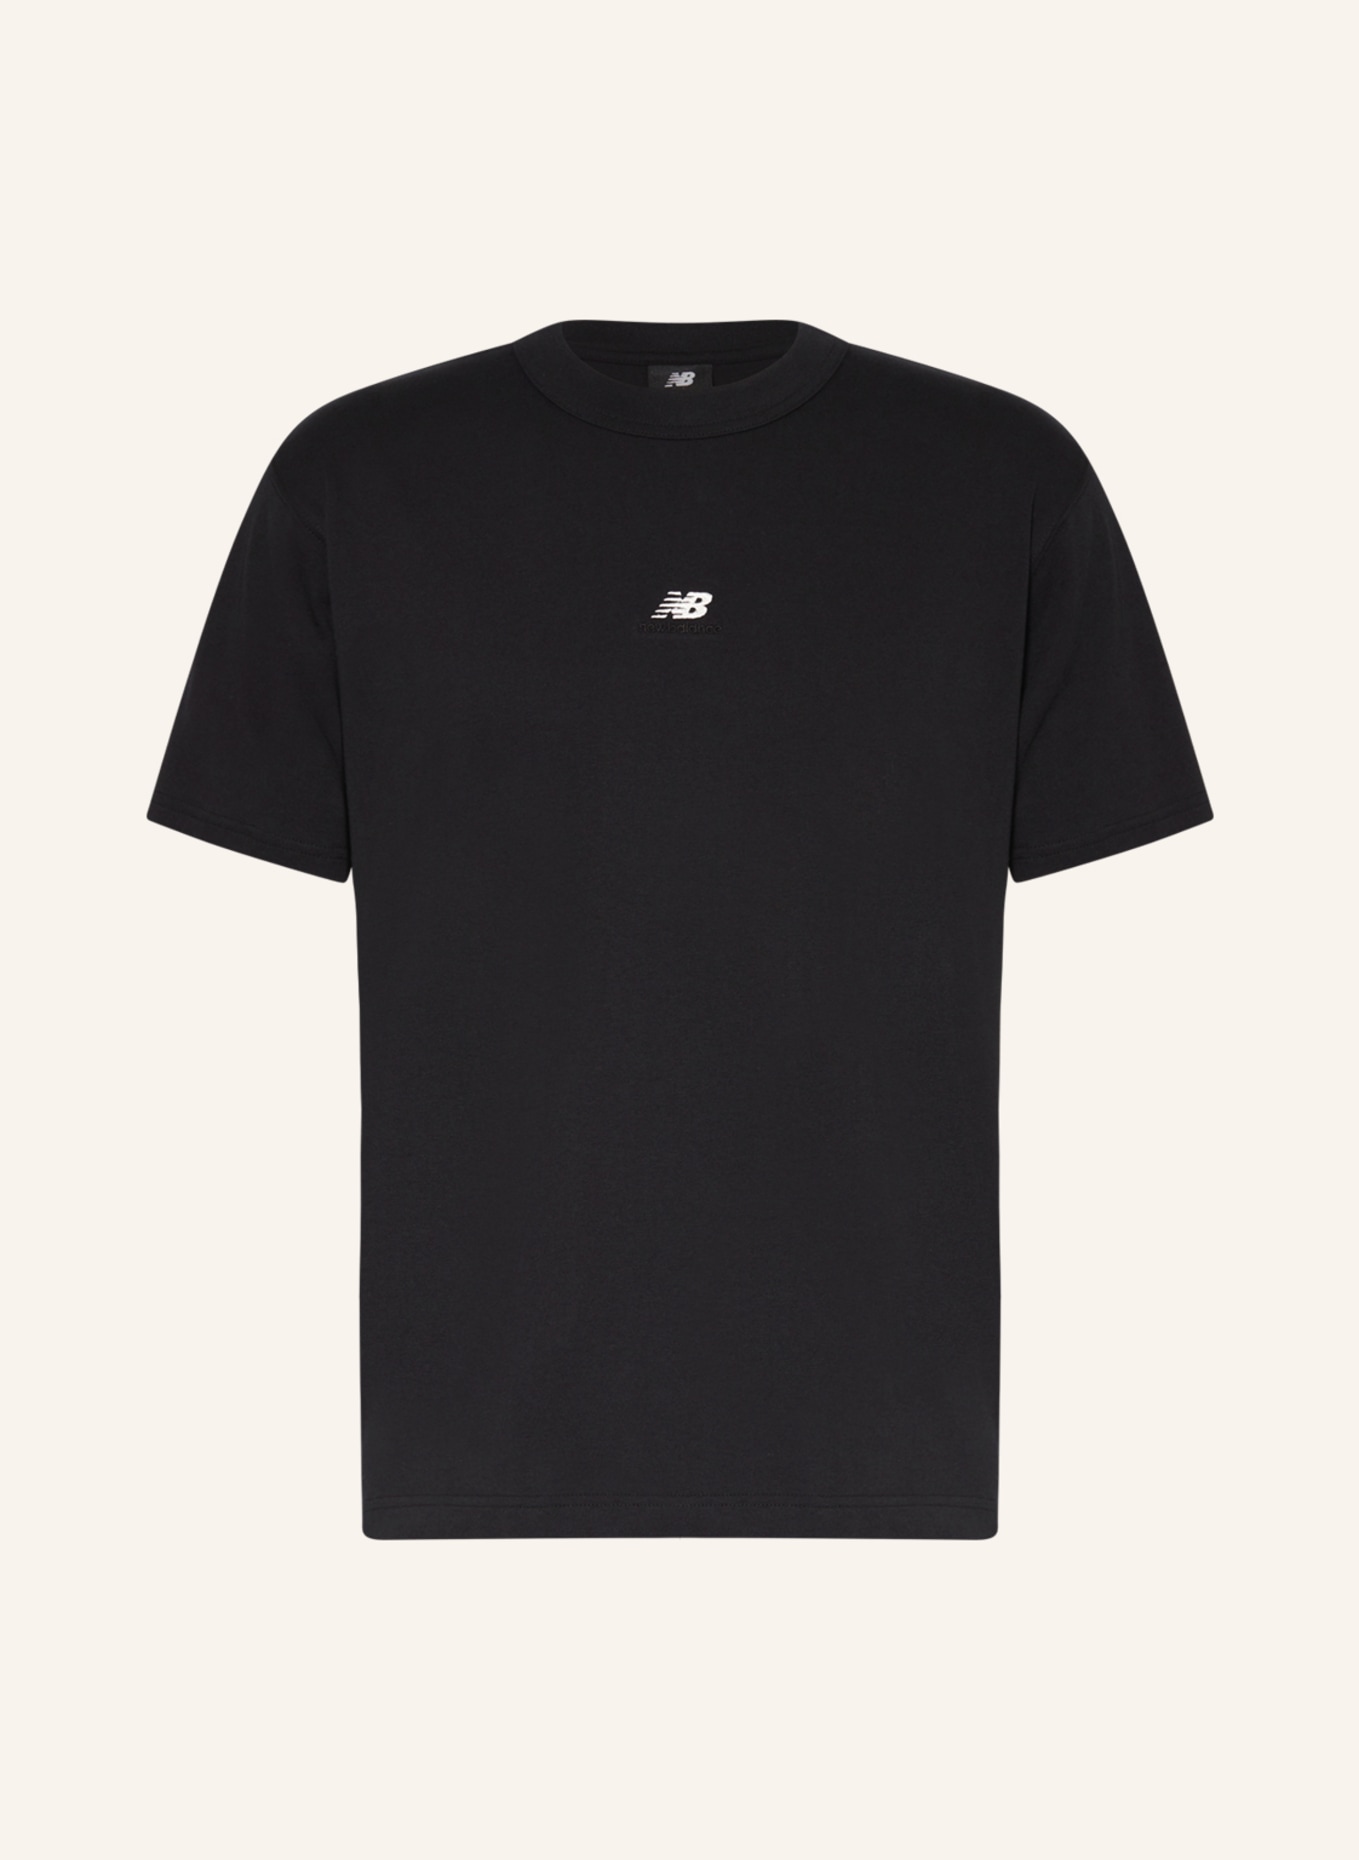 new balance T-shirt ATHLETICS REMASTERED GRAPHIC in black